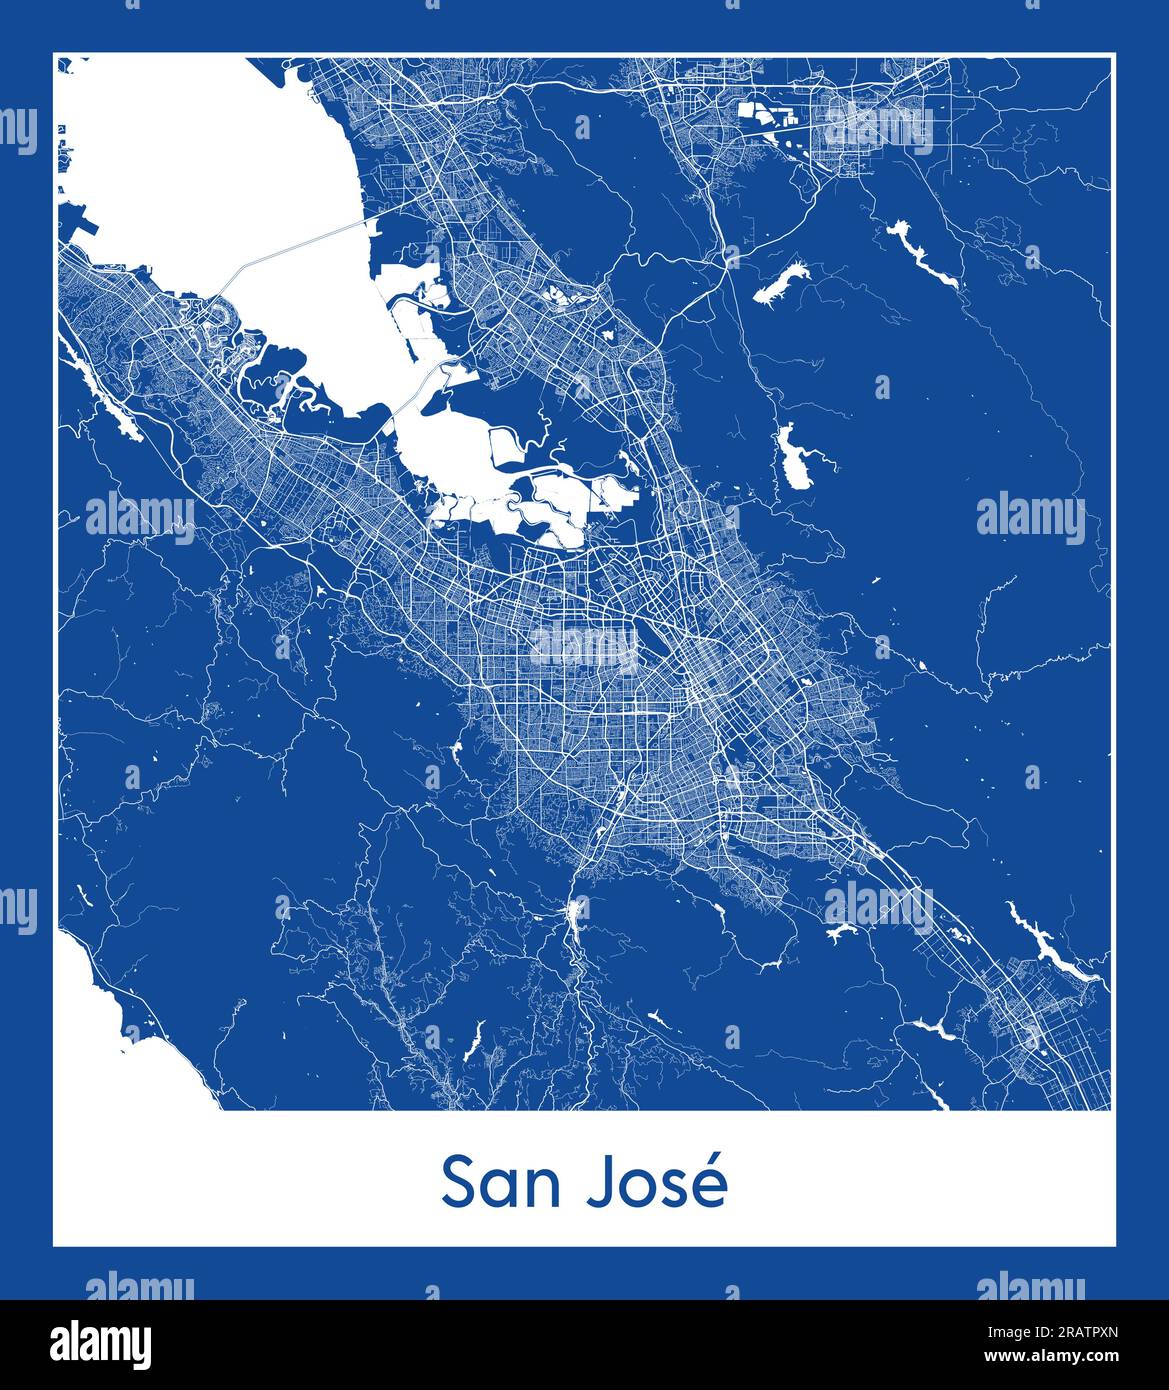 San Jose United States North America City map blue print vector illustration Stock Vector